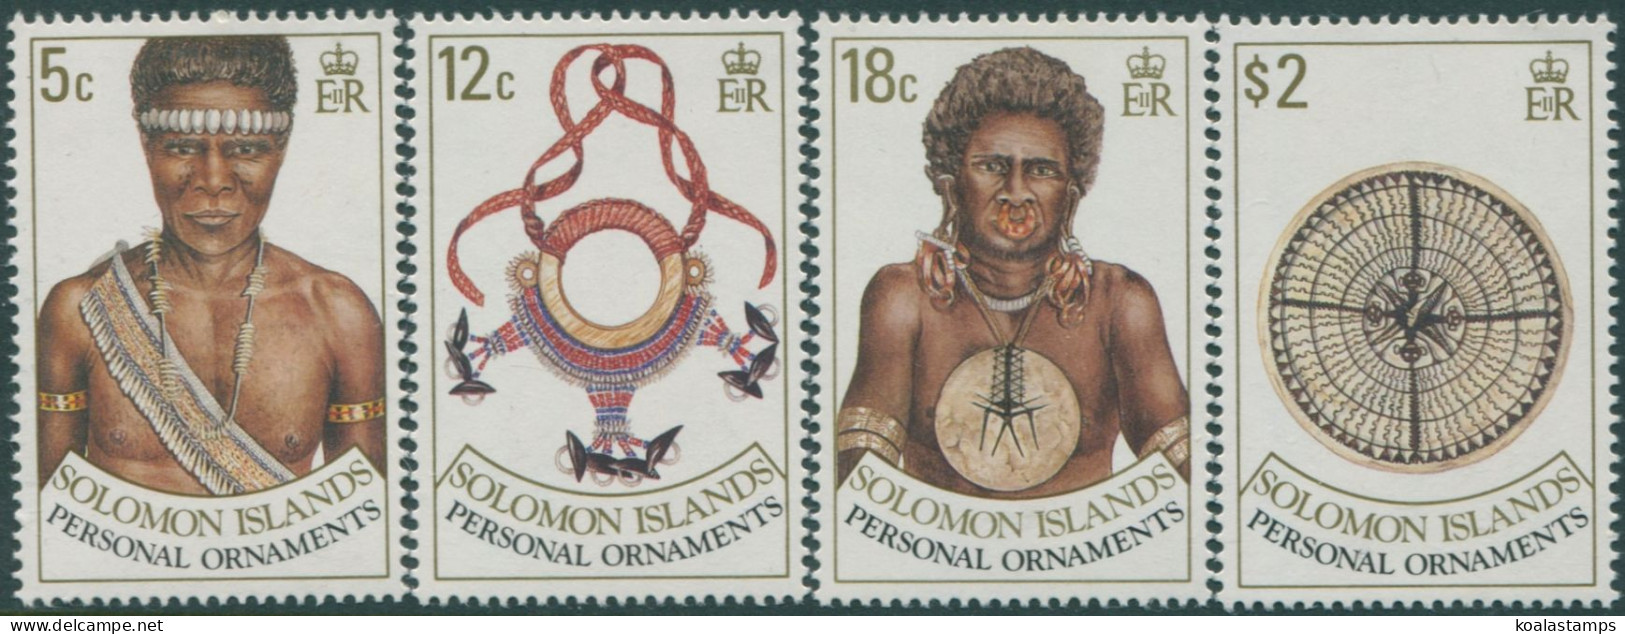 Solomon Islands 1990 SG666-669 Personal Ornaments Set MNH - Solomon Islands (1978-...)